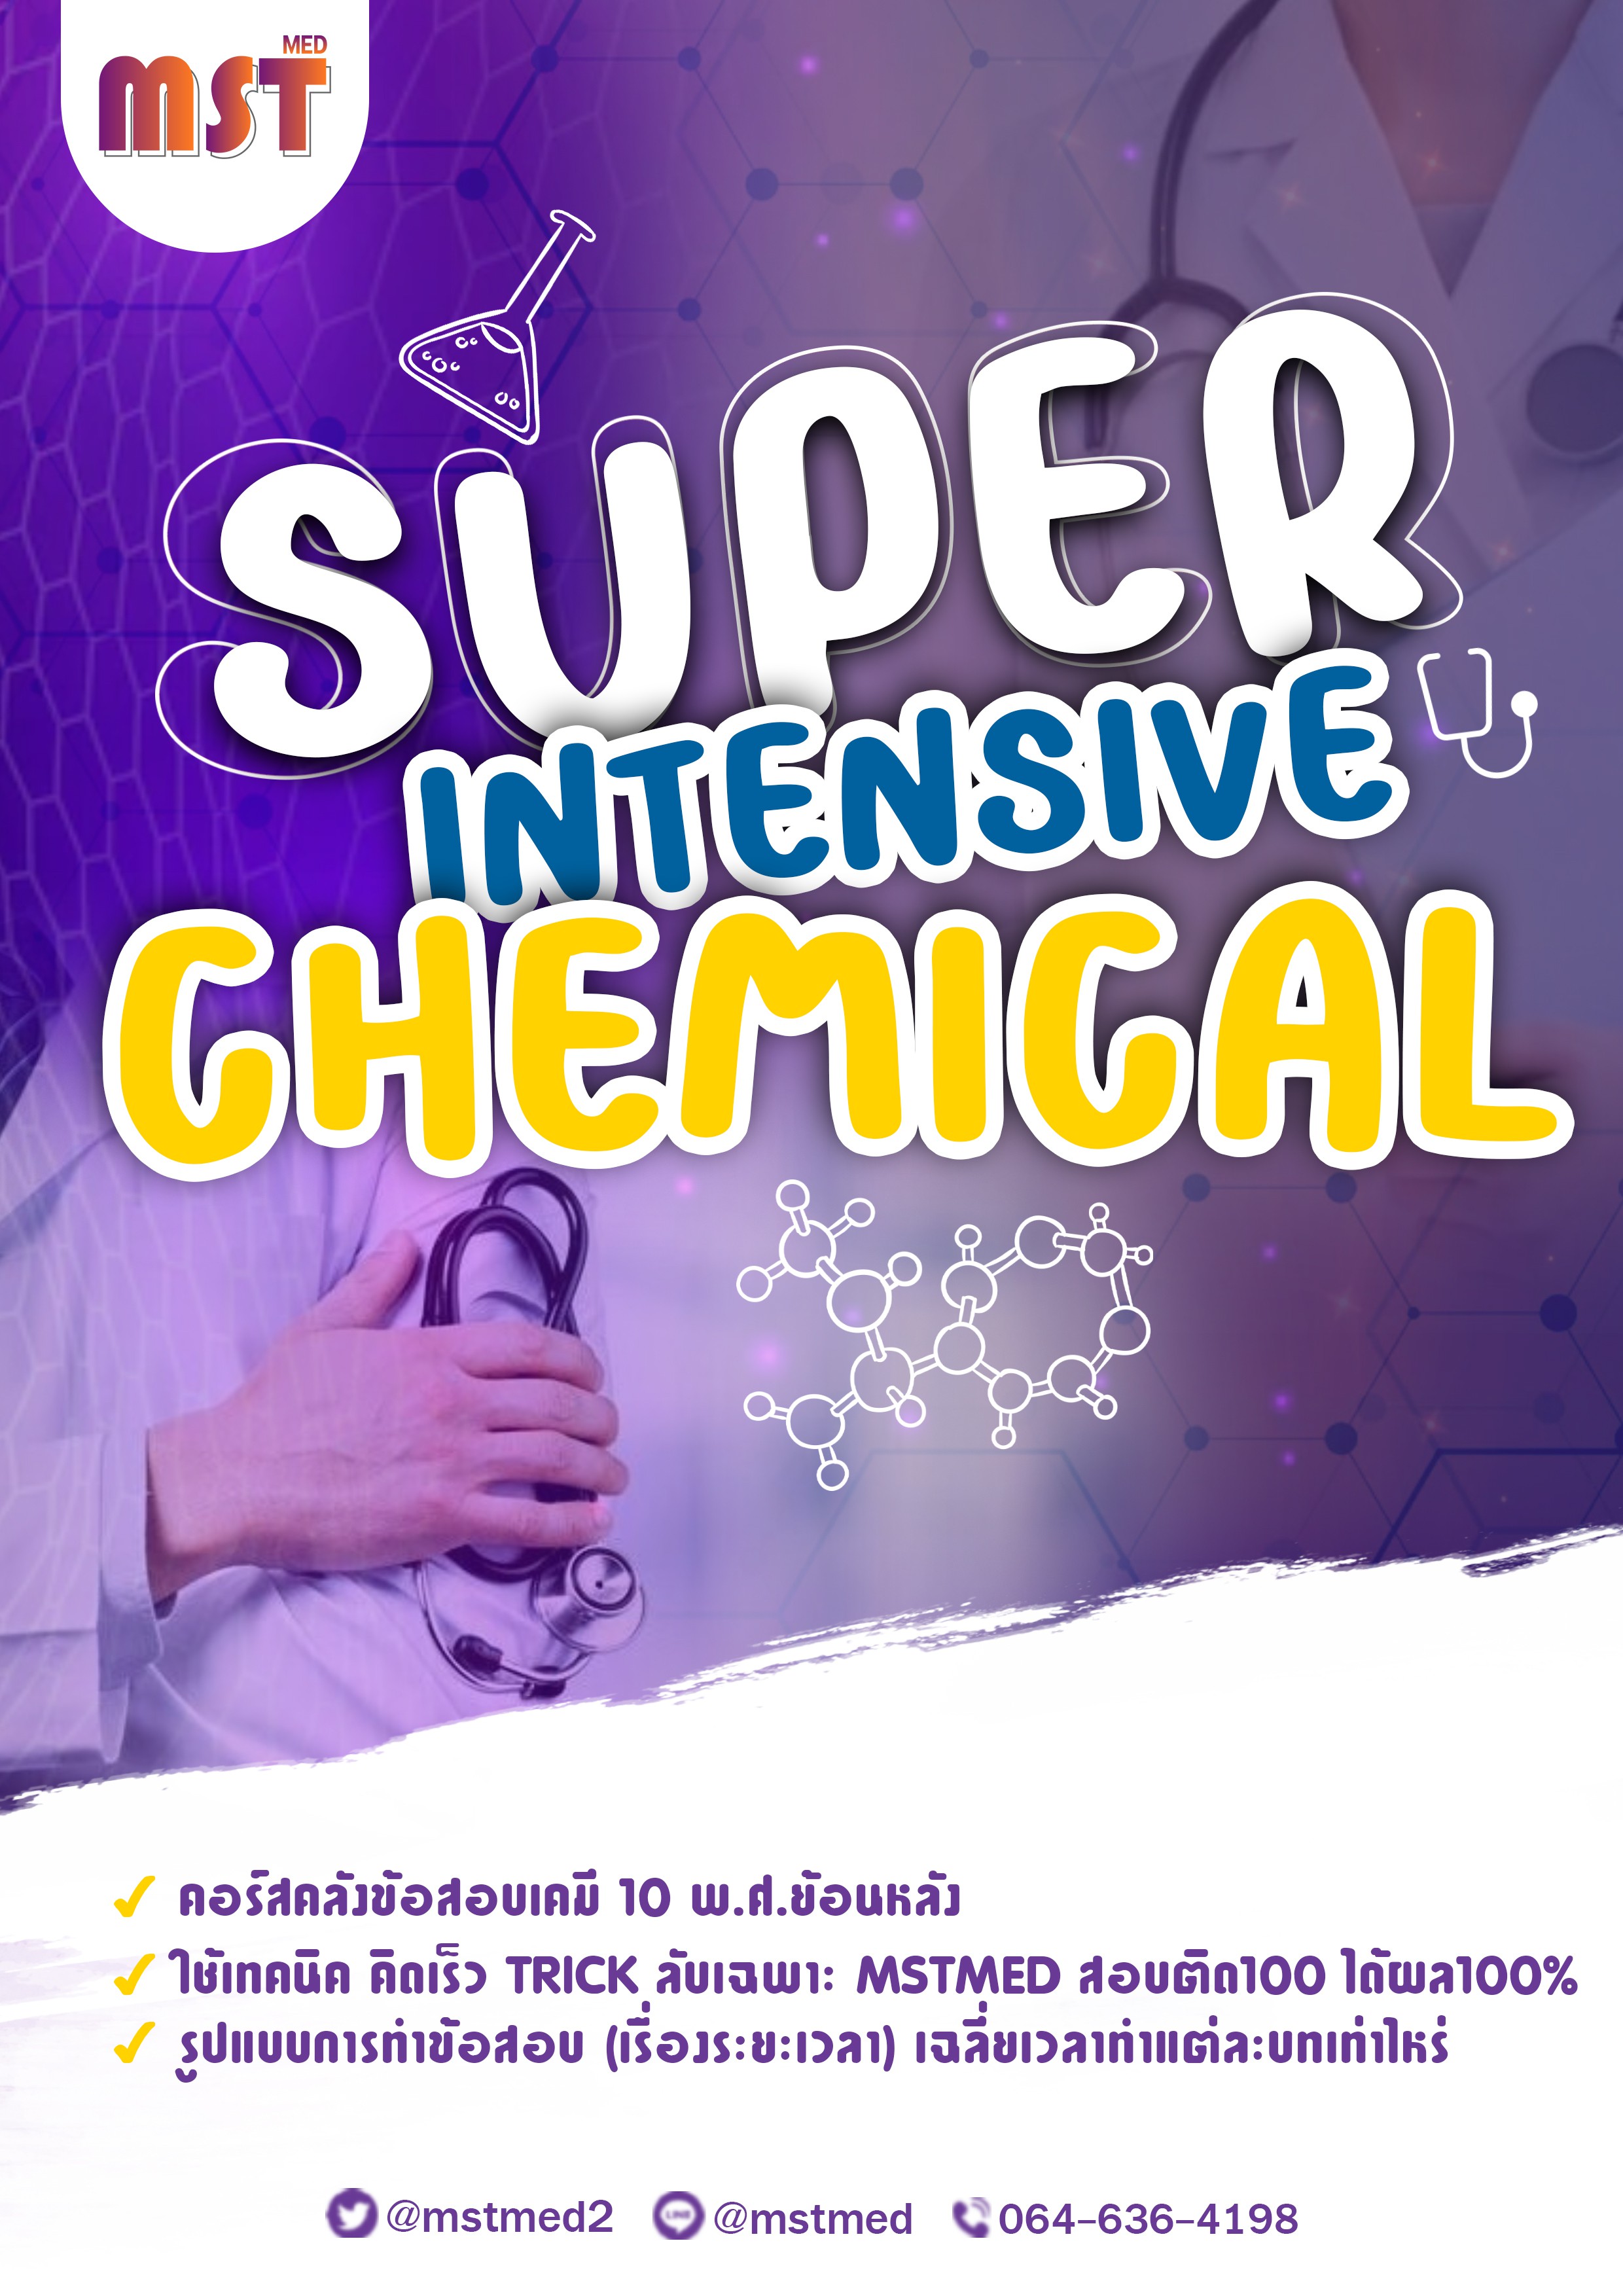 Super Intensive Chem ( New )